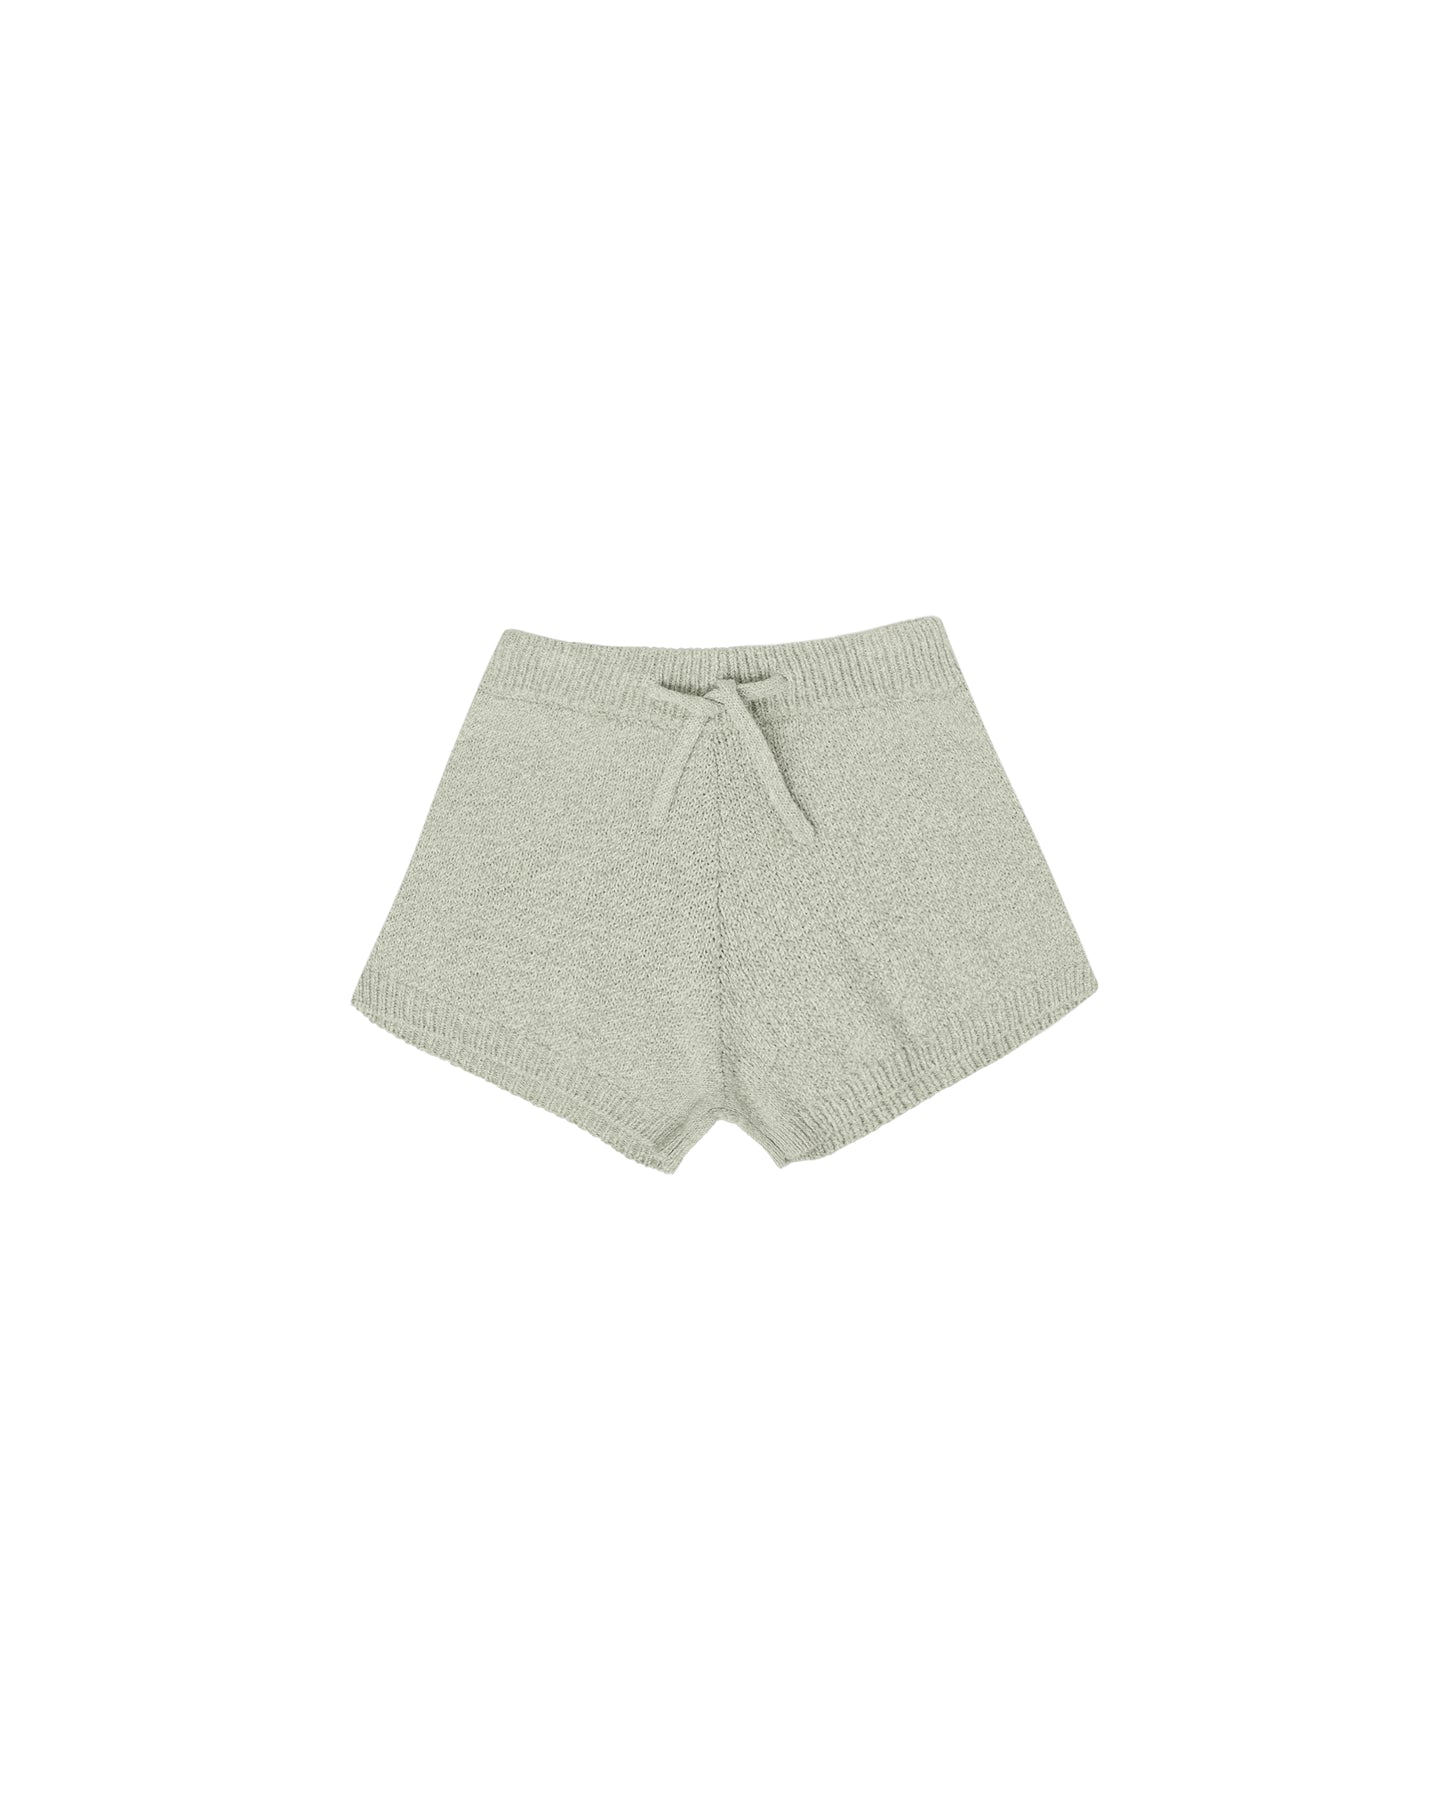 Rylee + Cru - Knit Shorts - Heathered Laurel